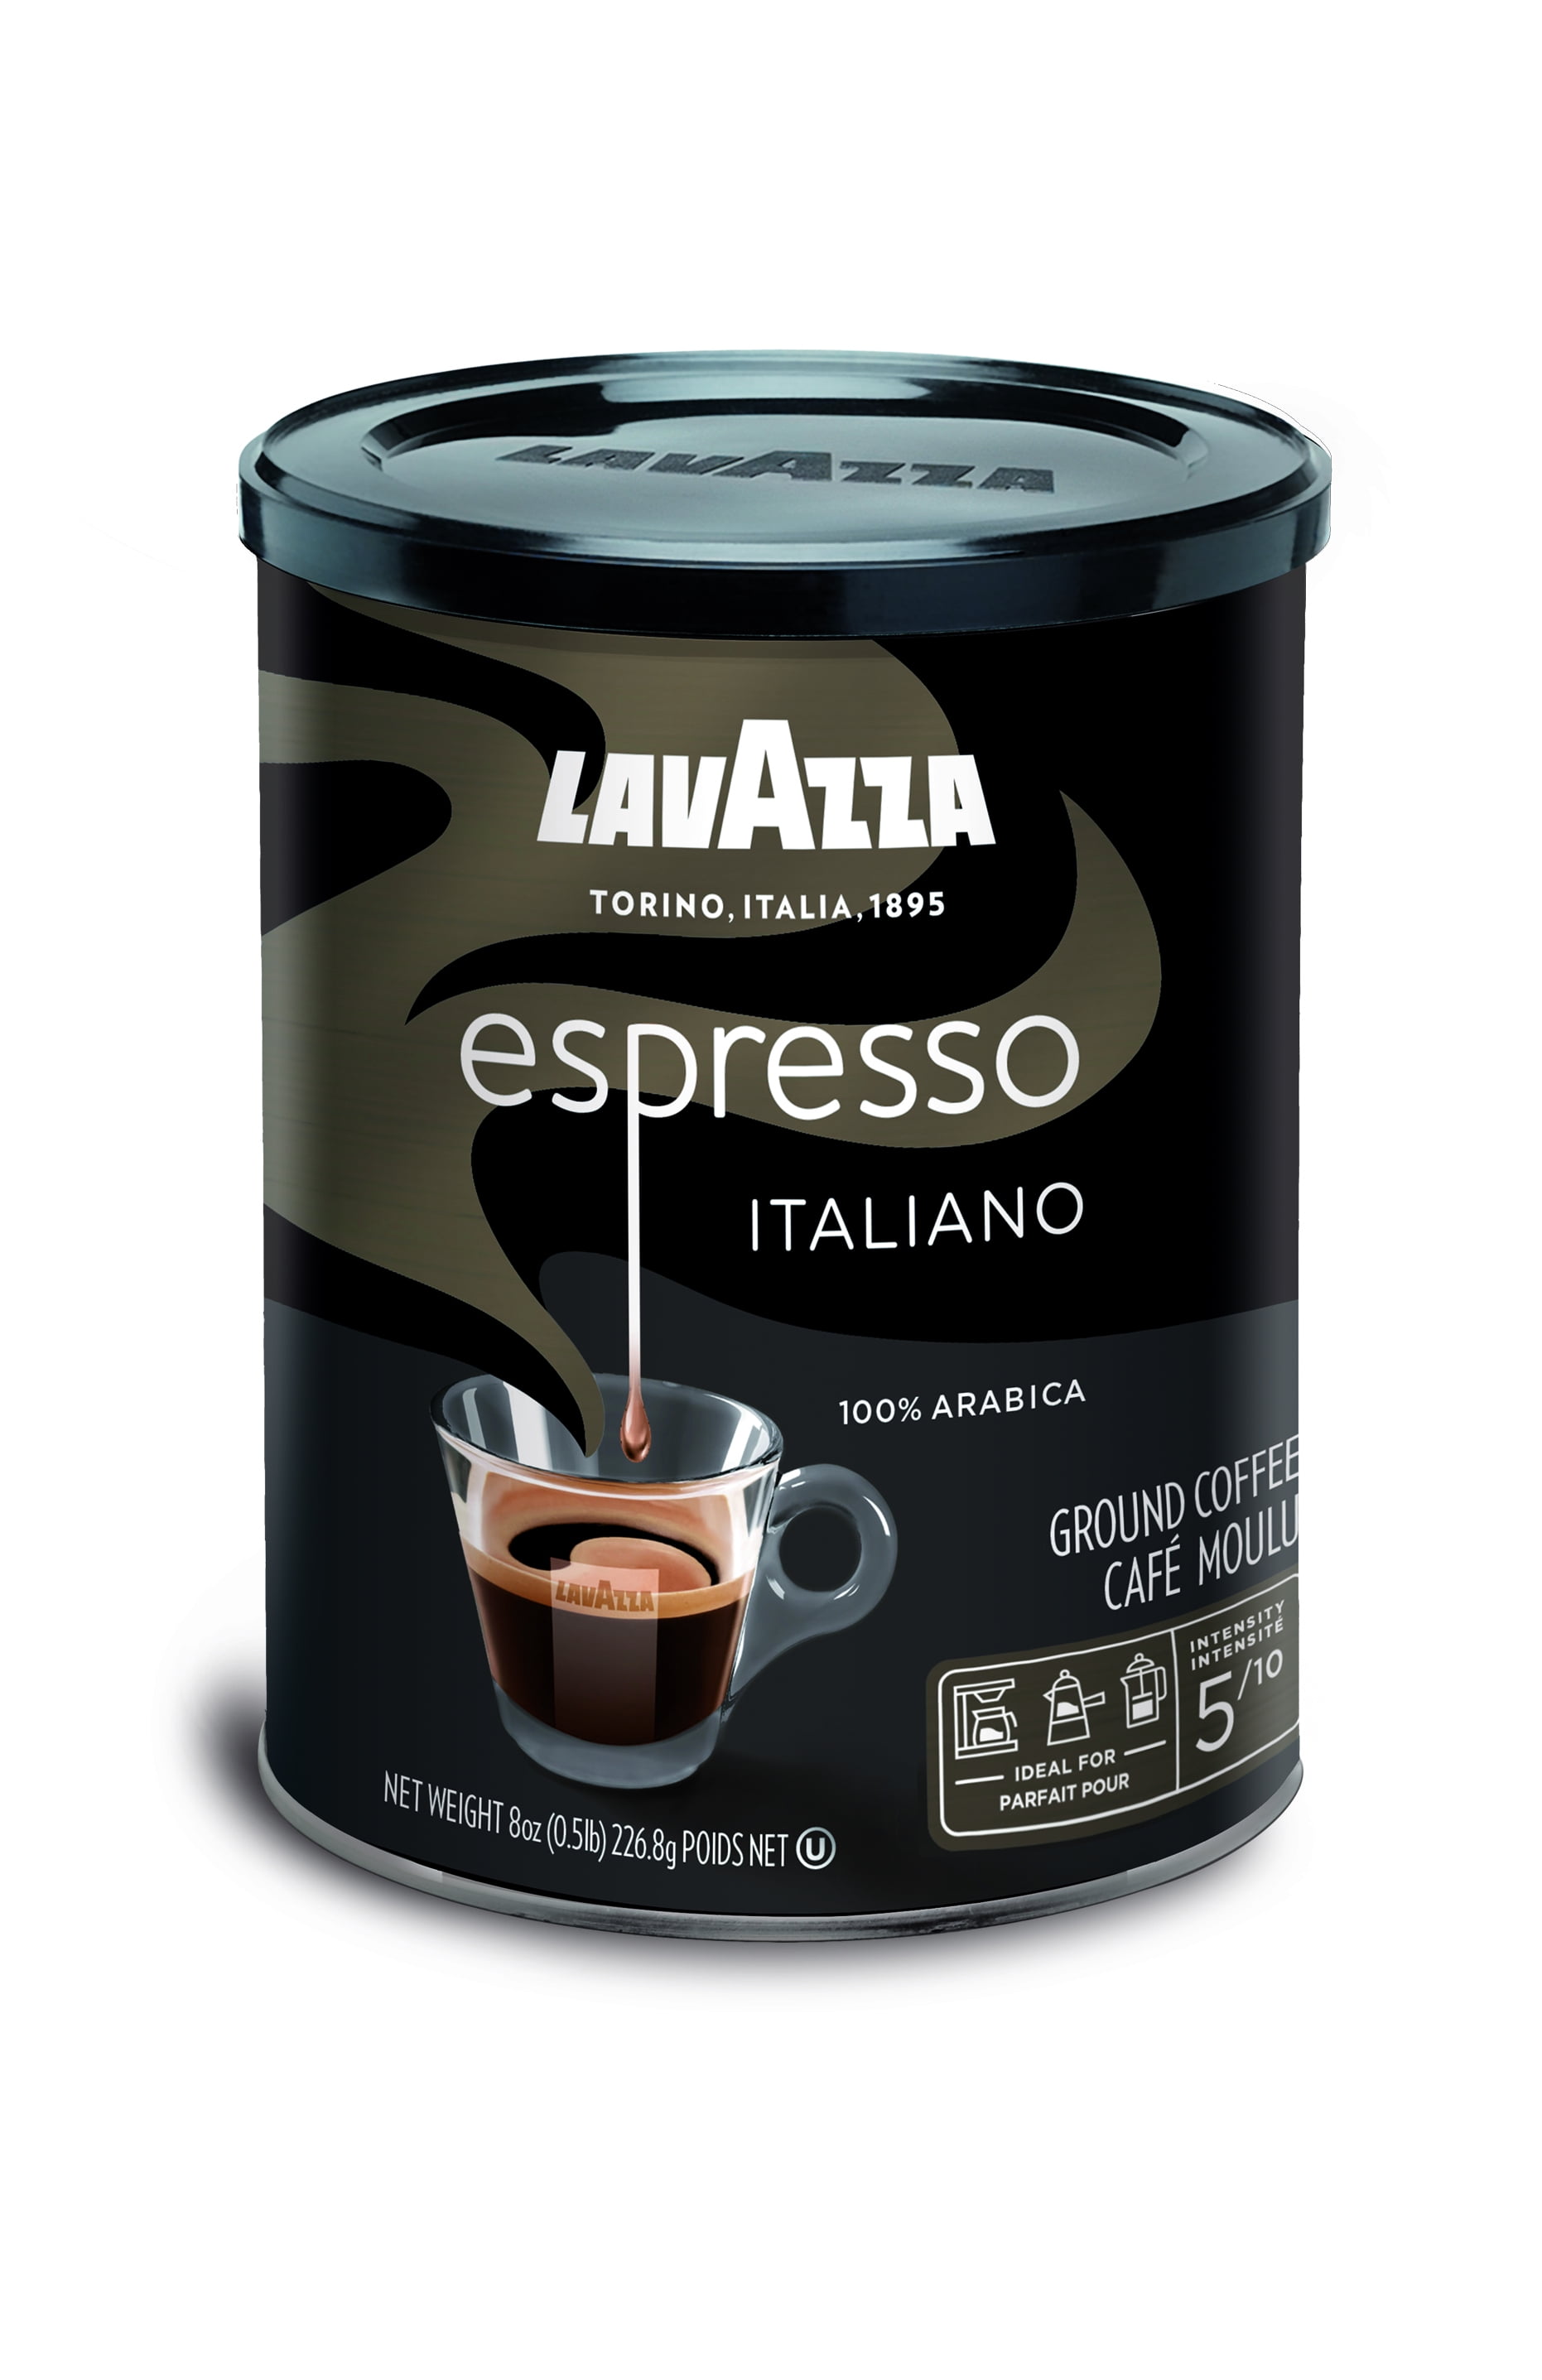 Кофе молотый lavazza 250 г. Кофе молотый Lavazza Espresso italiano Classico 250 г. Лавацца эспрессо молотый 250. Lavazza Espresso 250 гр. Кофе молотый/ Lavazza Caffe Espresso/ 250 гр./ (ж/б).